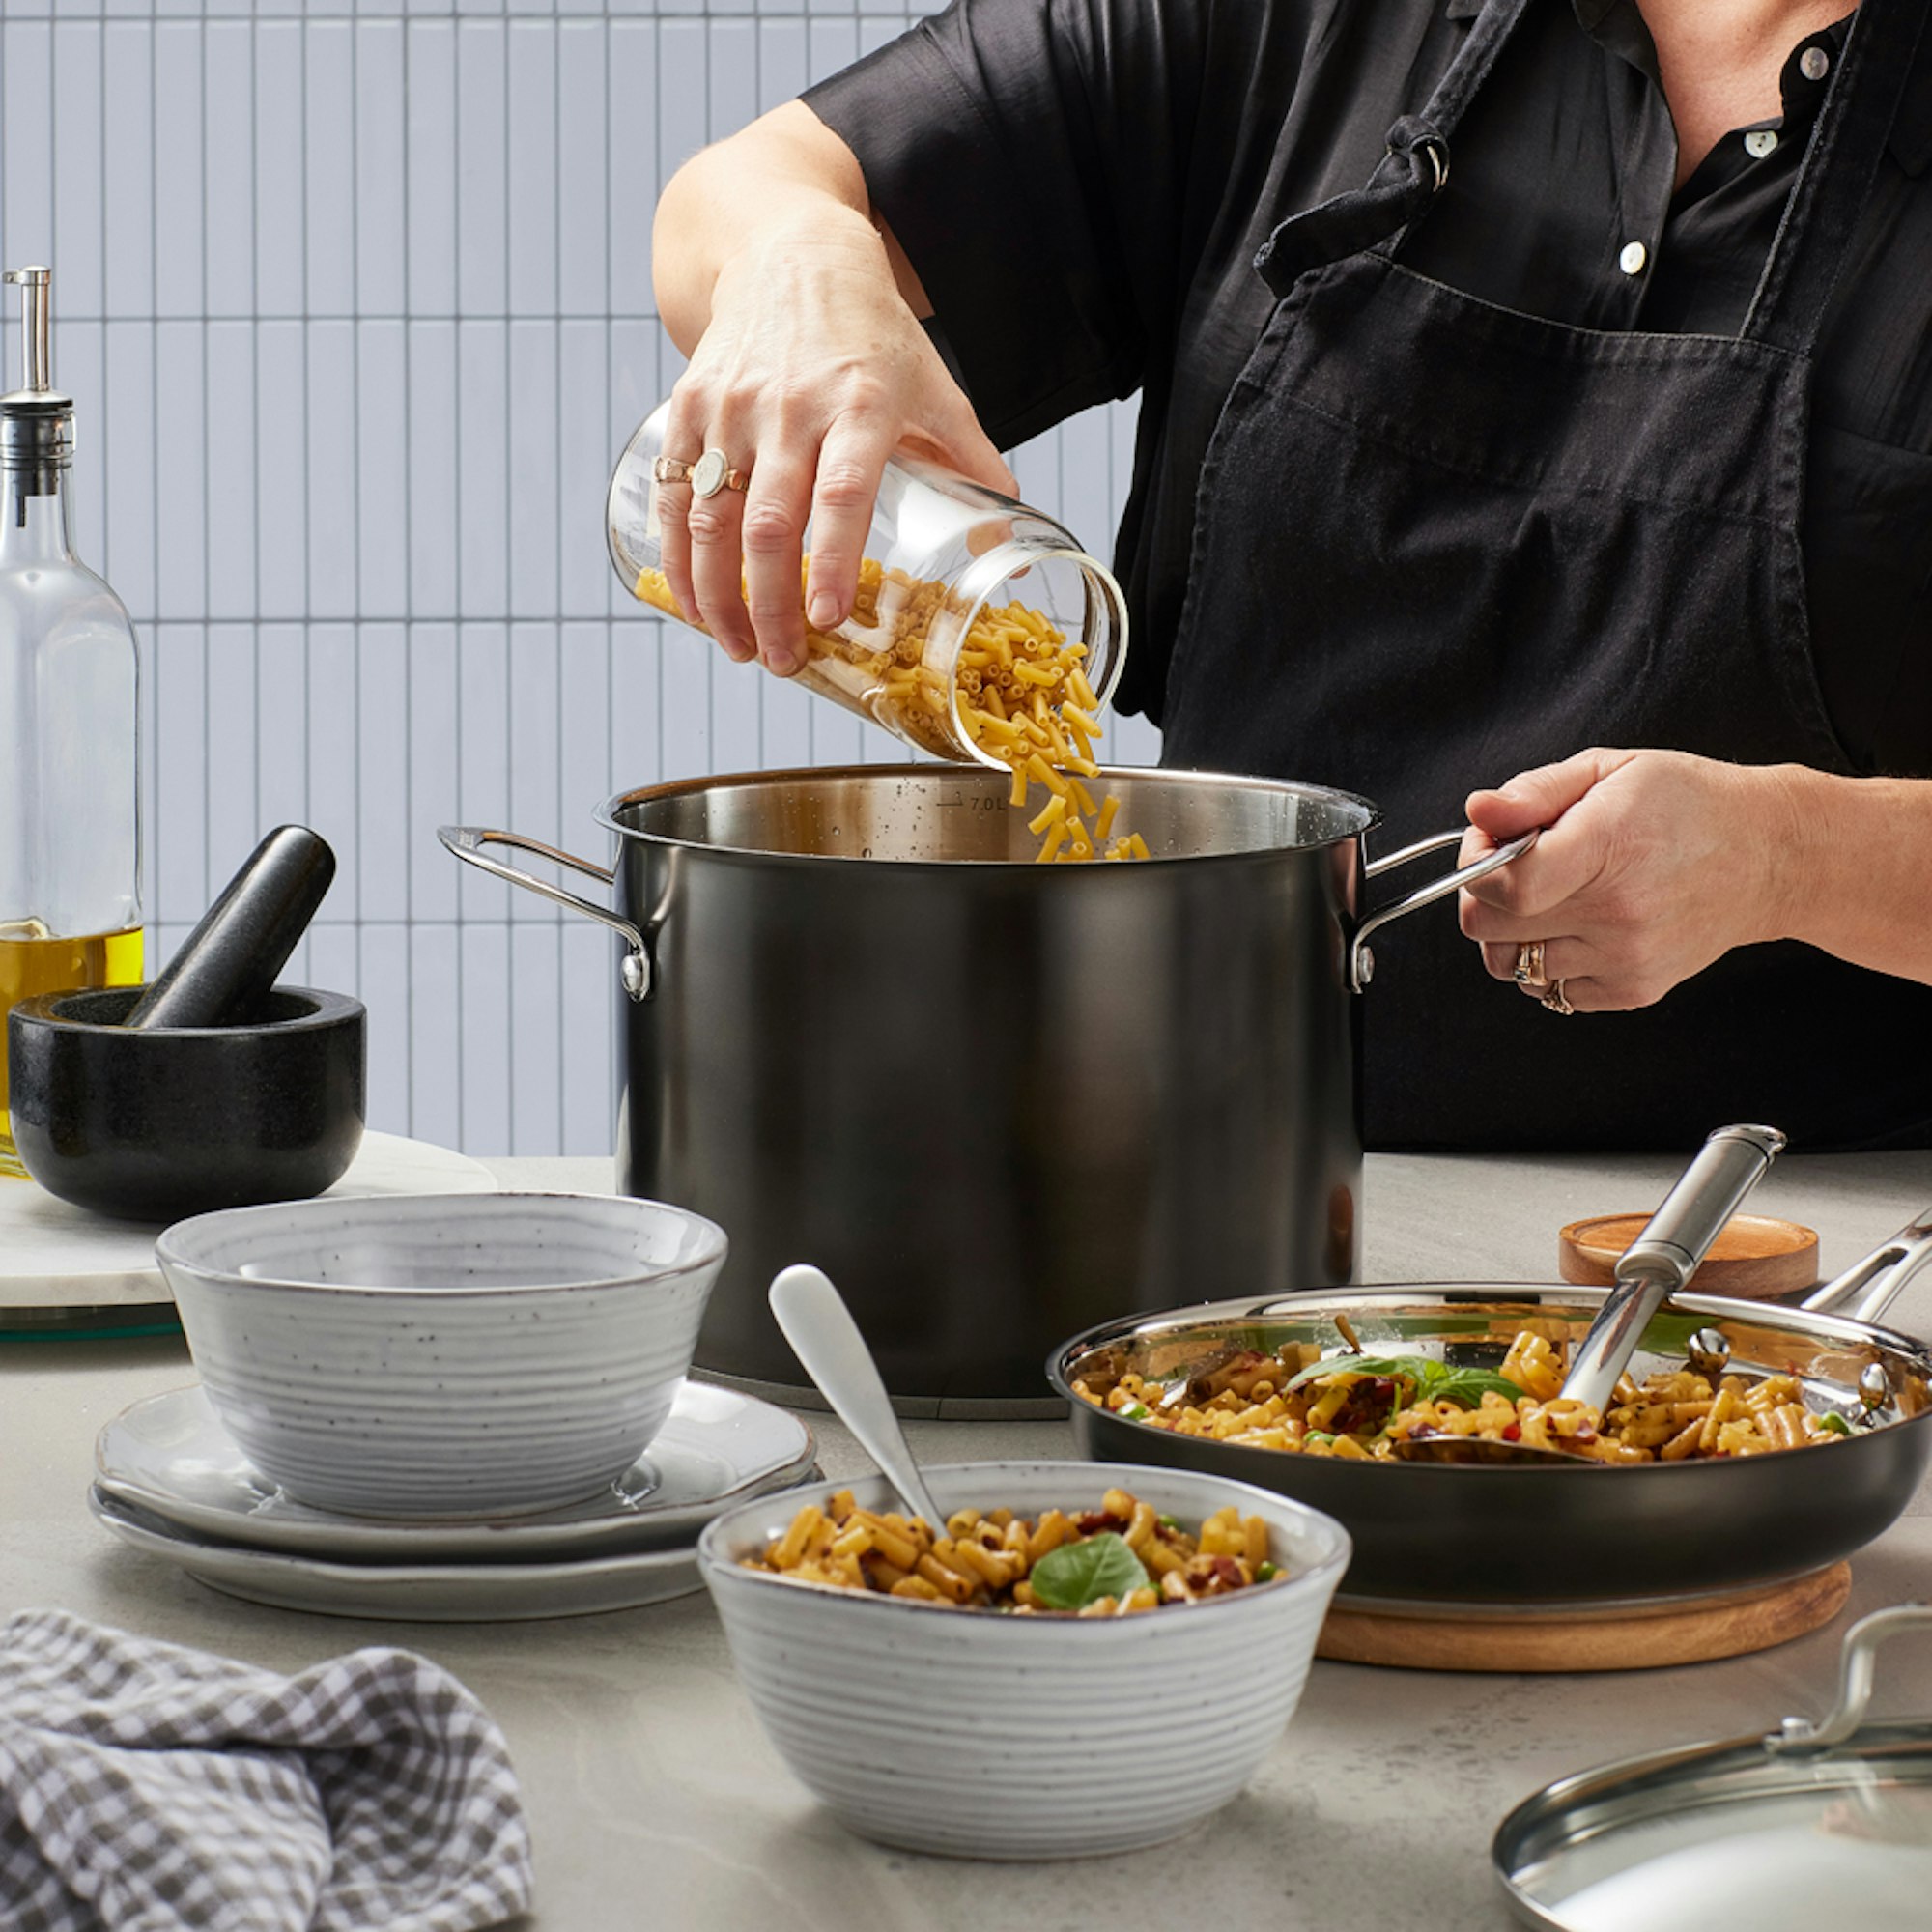 Cooking lifestyle photo pouring pasta into black stock pot